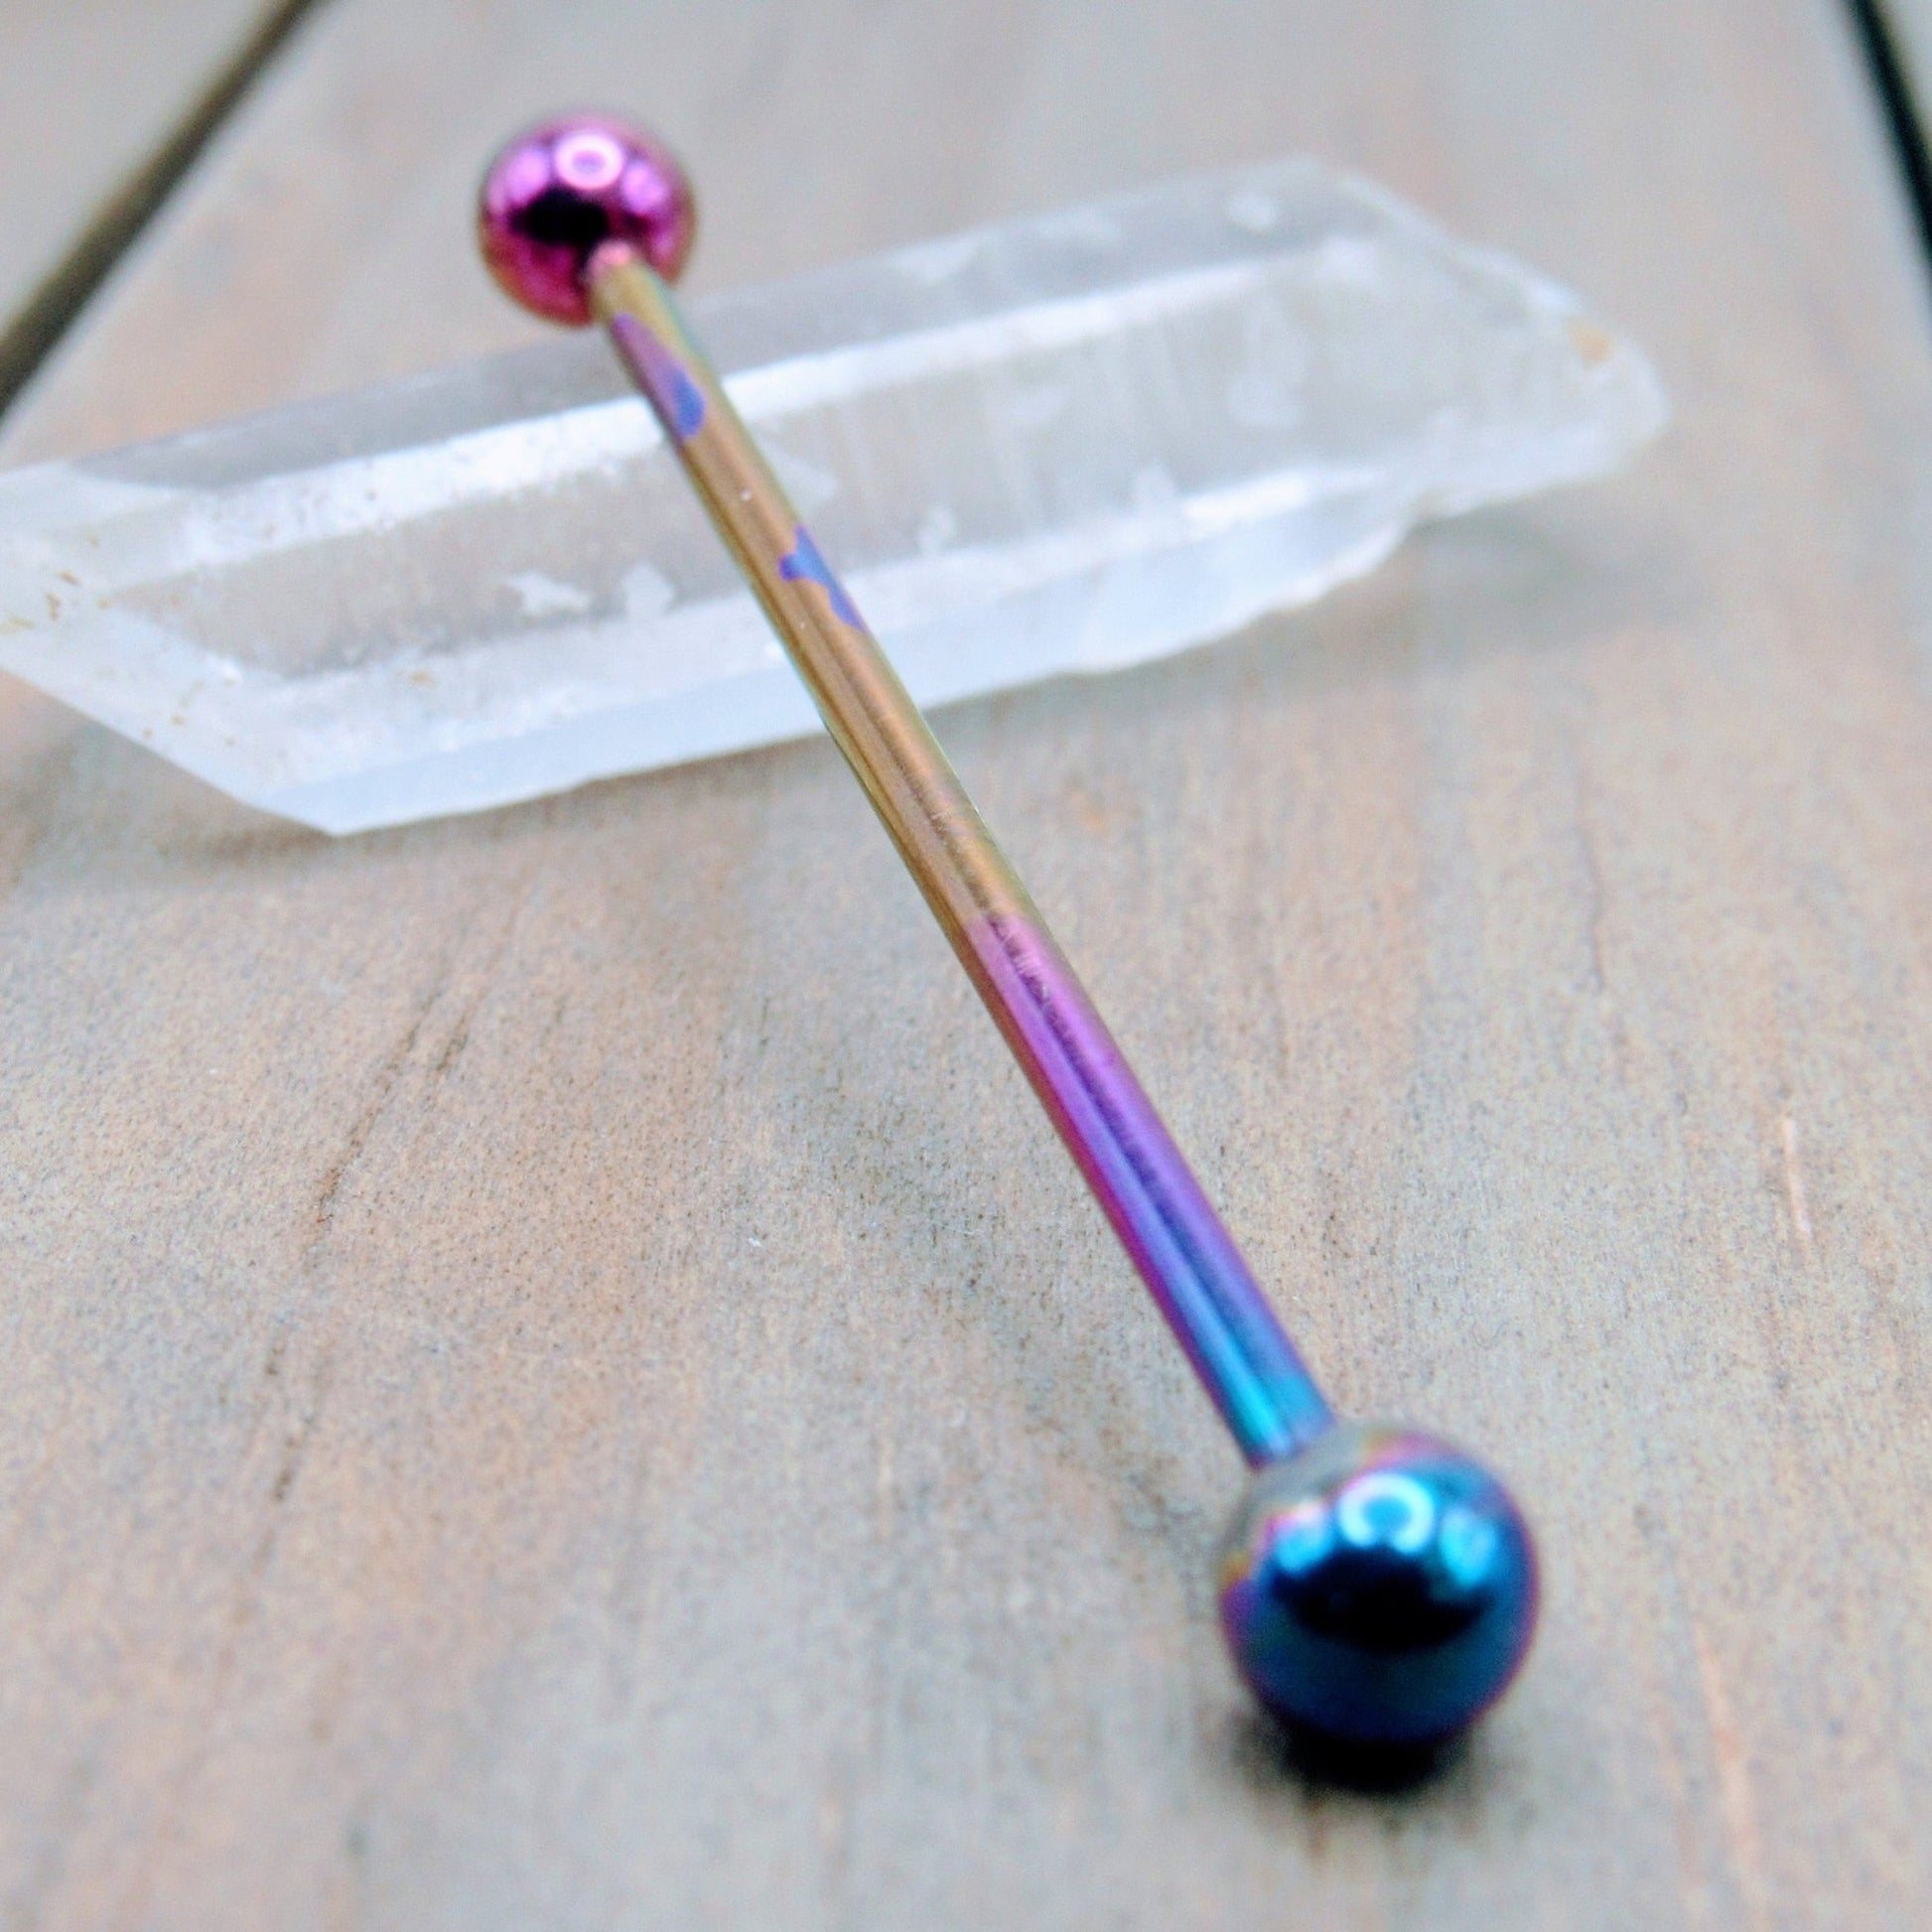 14g Rainbow titanium anodized industrial piercing barbell 5mm ball ends internally threaded scaffold bar - Siren Body Jewelry